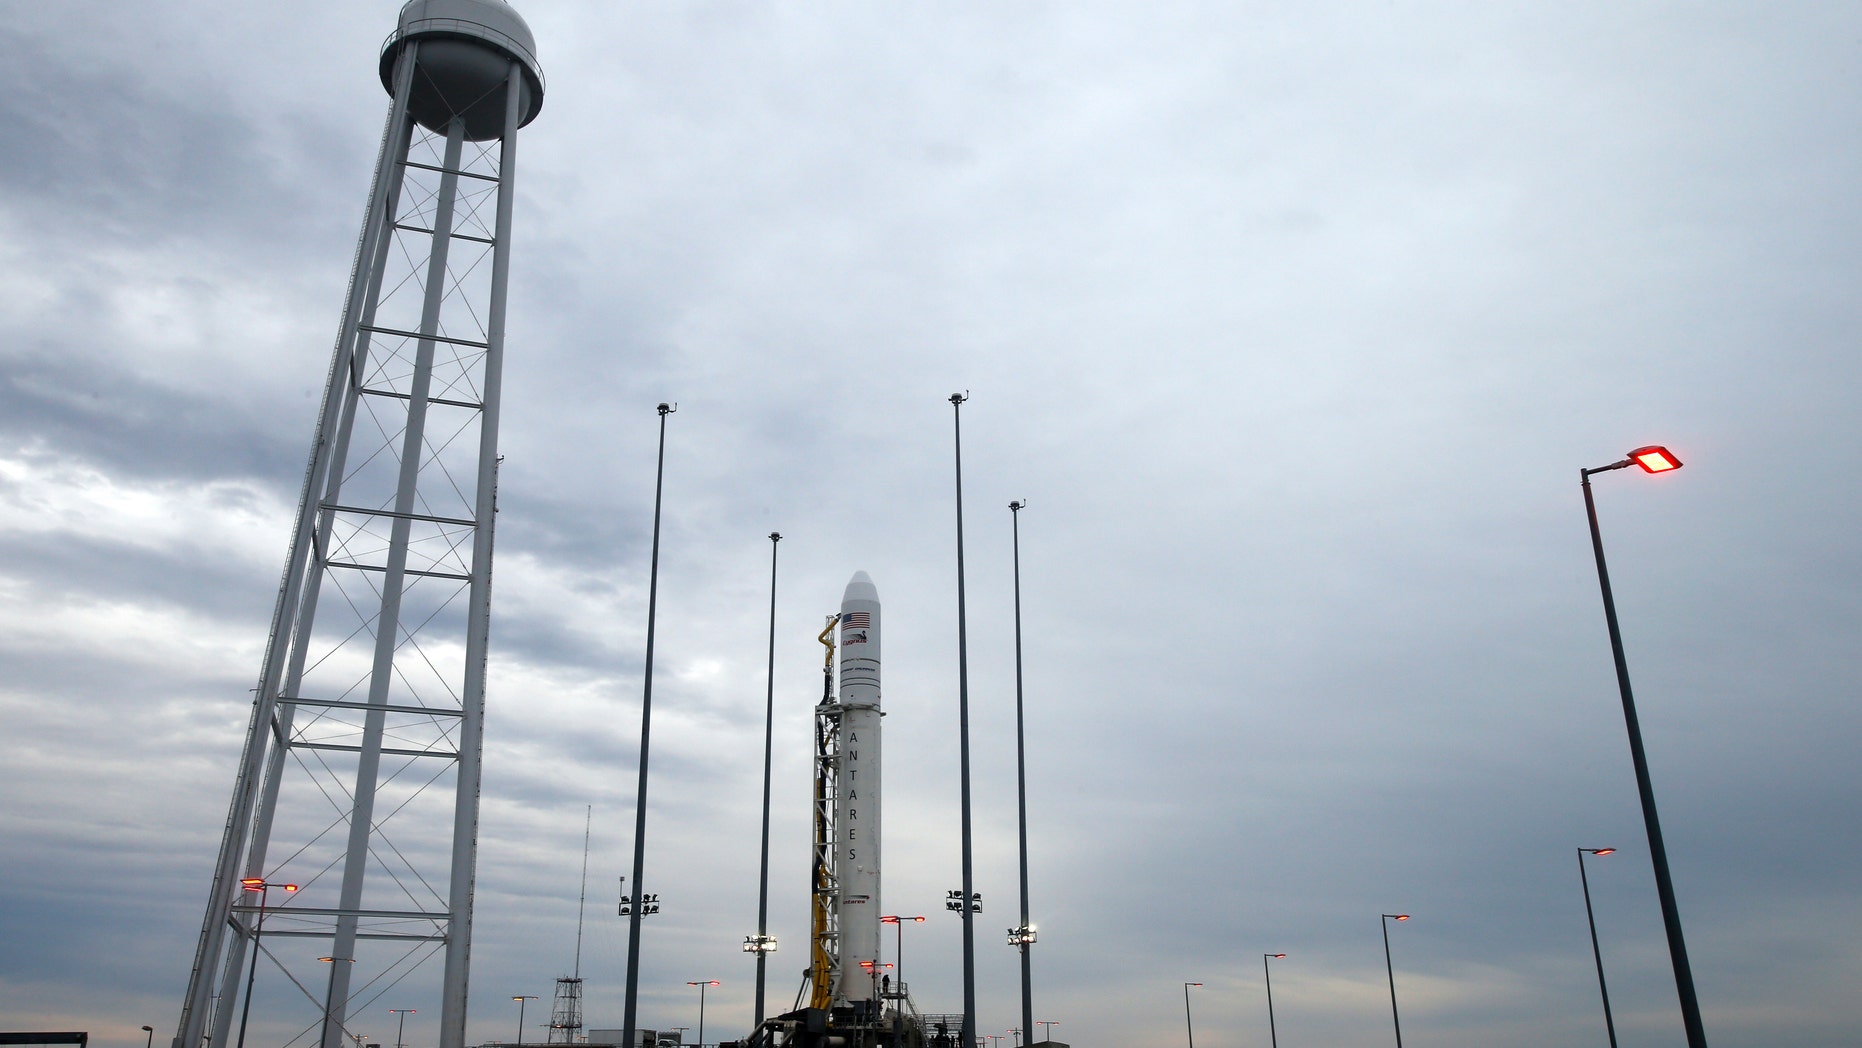 The Northrop Grumman Antares rocket sits at the top of its launch pad at NASA's Wallops flight facility in Wallops Island, Virginia on Wednesday, November 14, 2018. (AP Photo / Steve Helber)